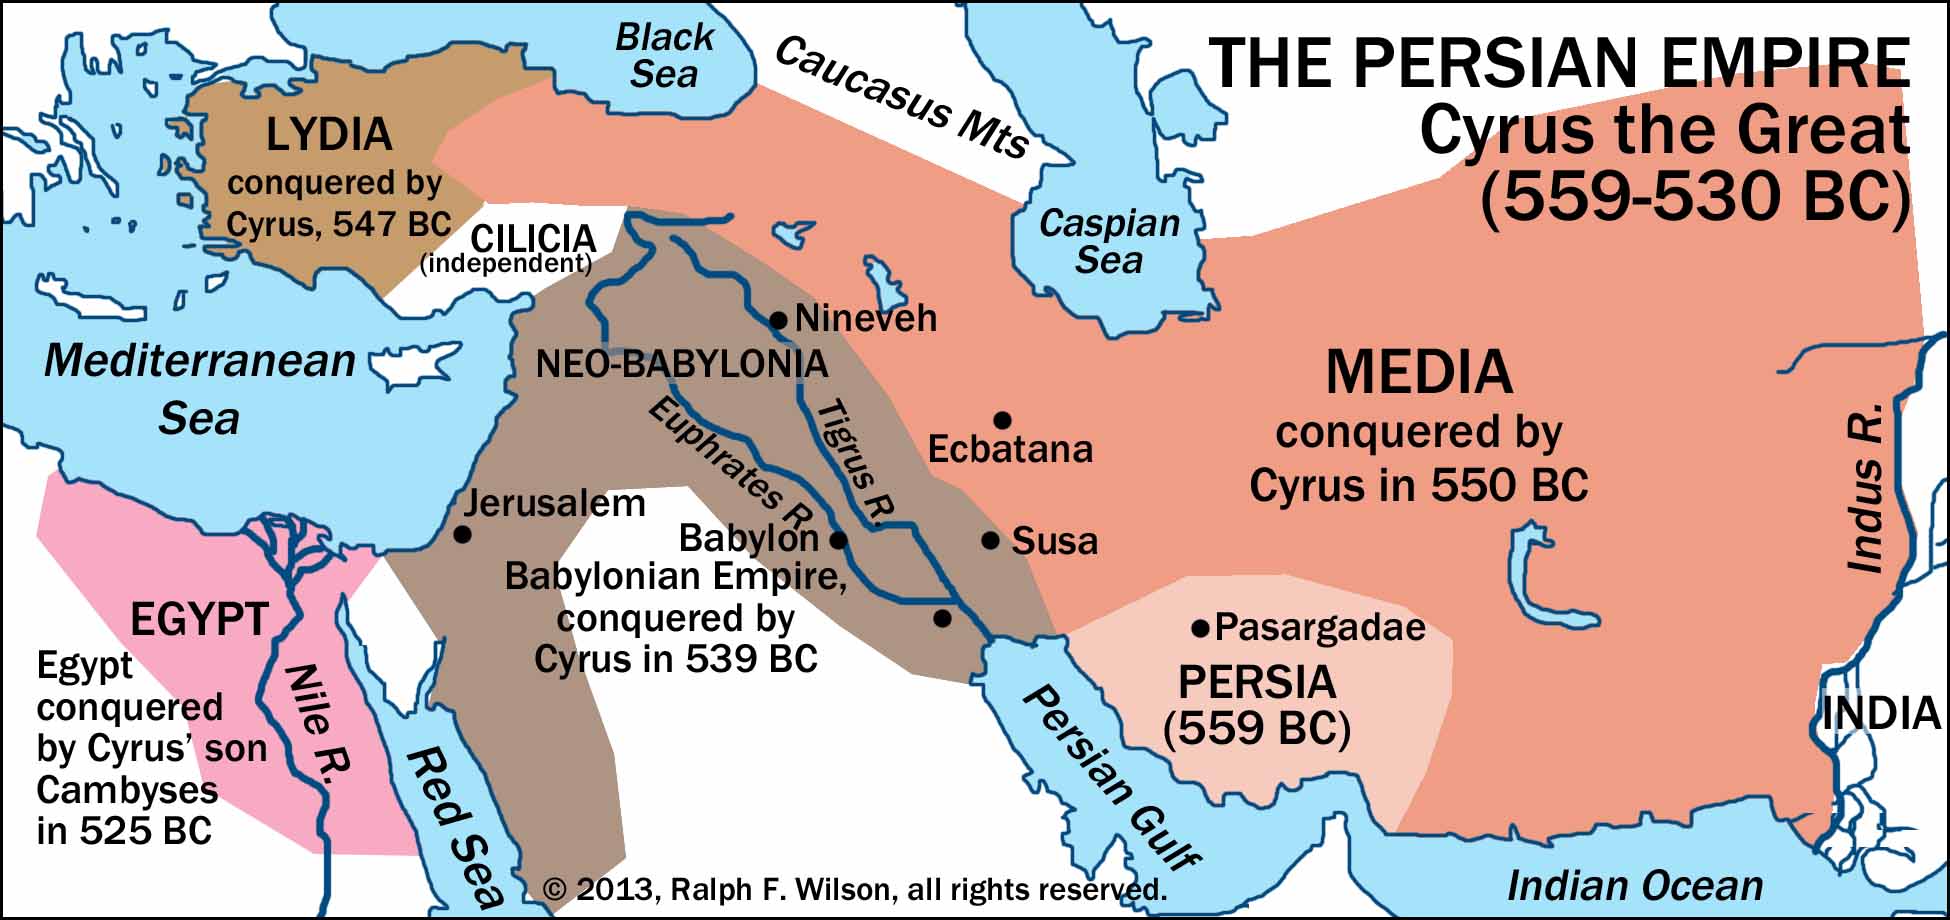 Appendix 4. The Medo-Persian Empire.